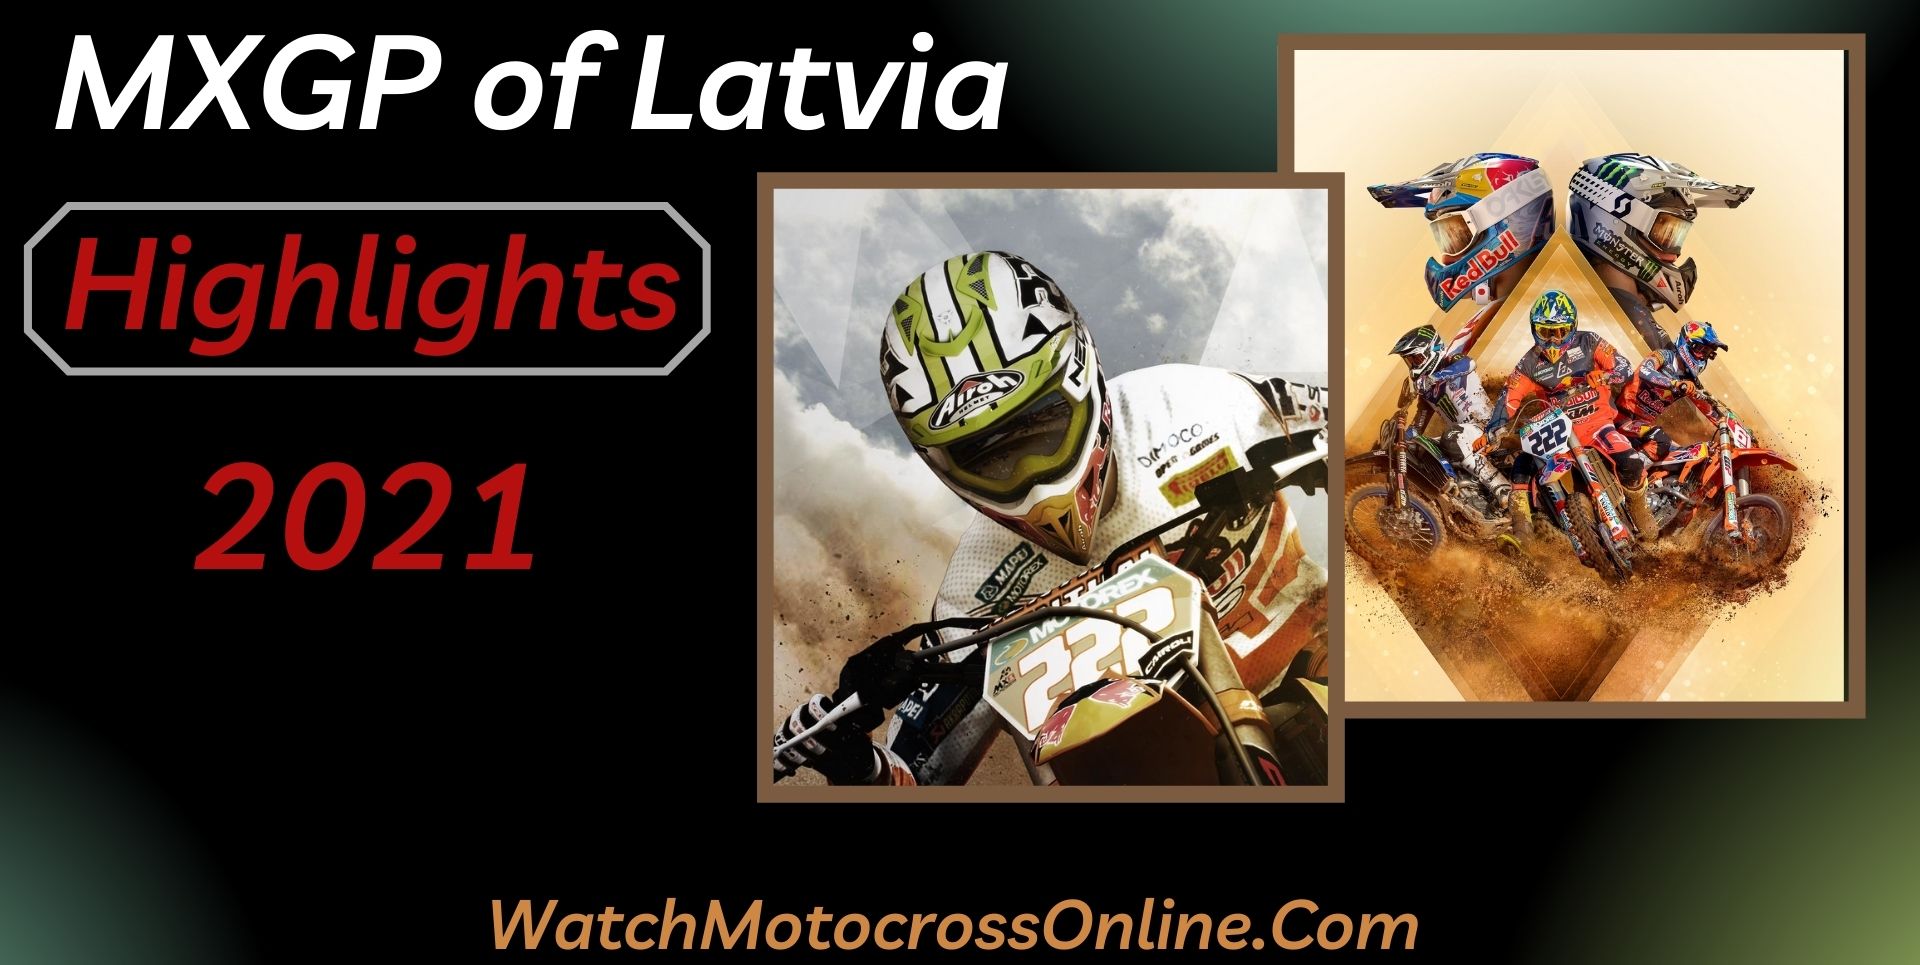 MXGP Of Latvia Highlights 2021